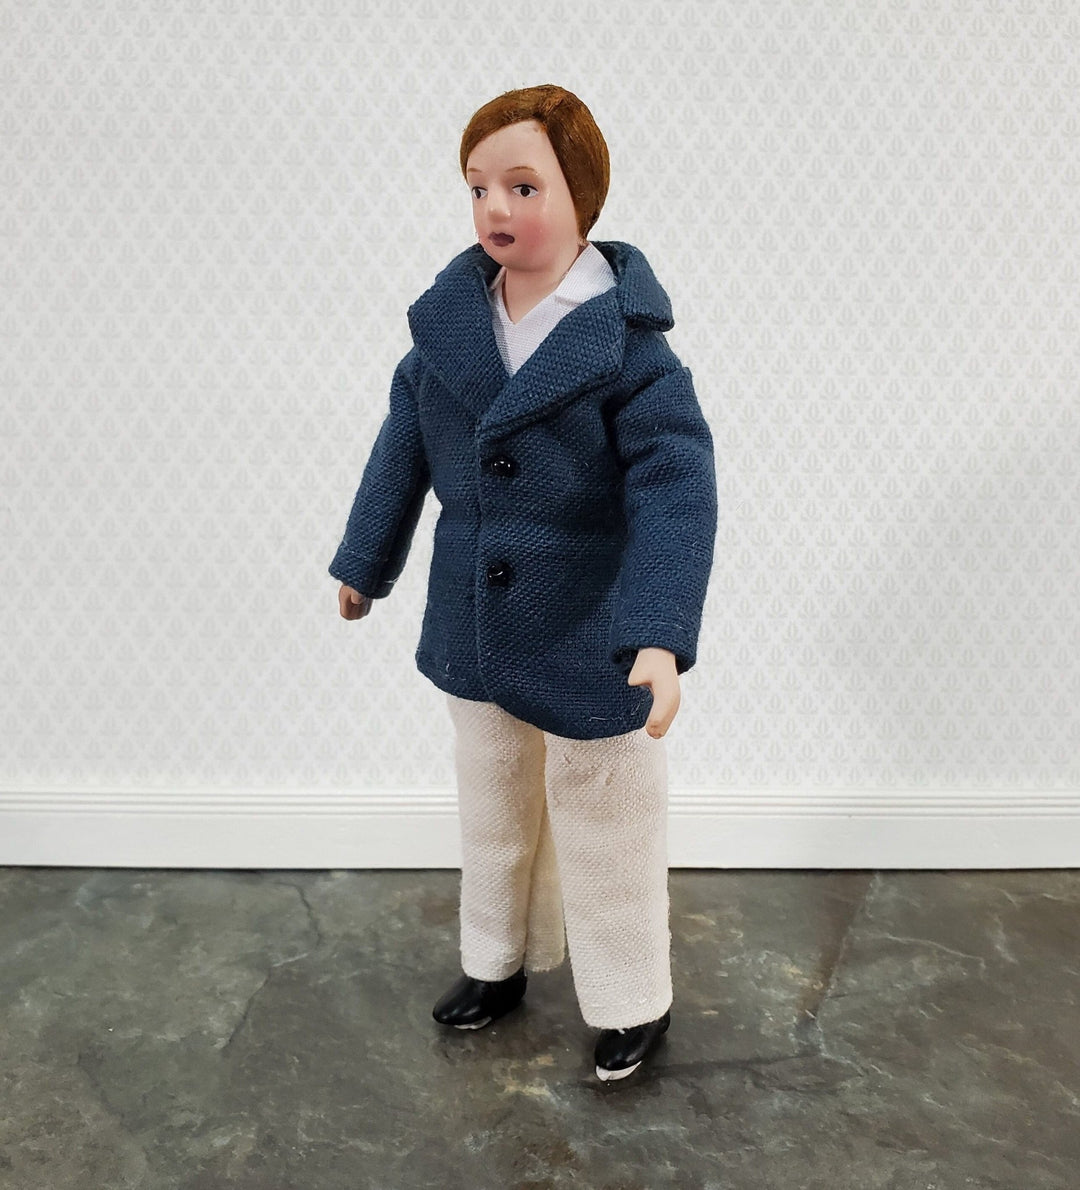 Dollhouse Man Modern Doll Porcelain Dad Father 1:12 Scale Blue Jacket - Miniature Crush